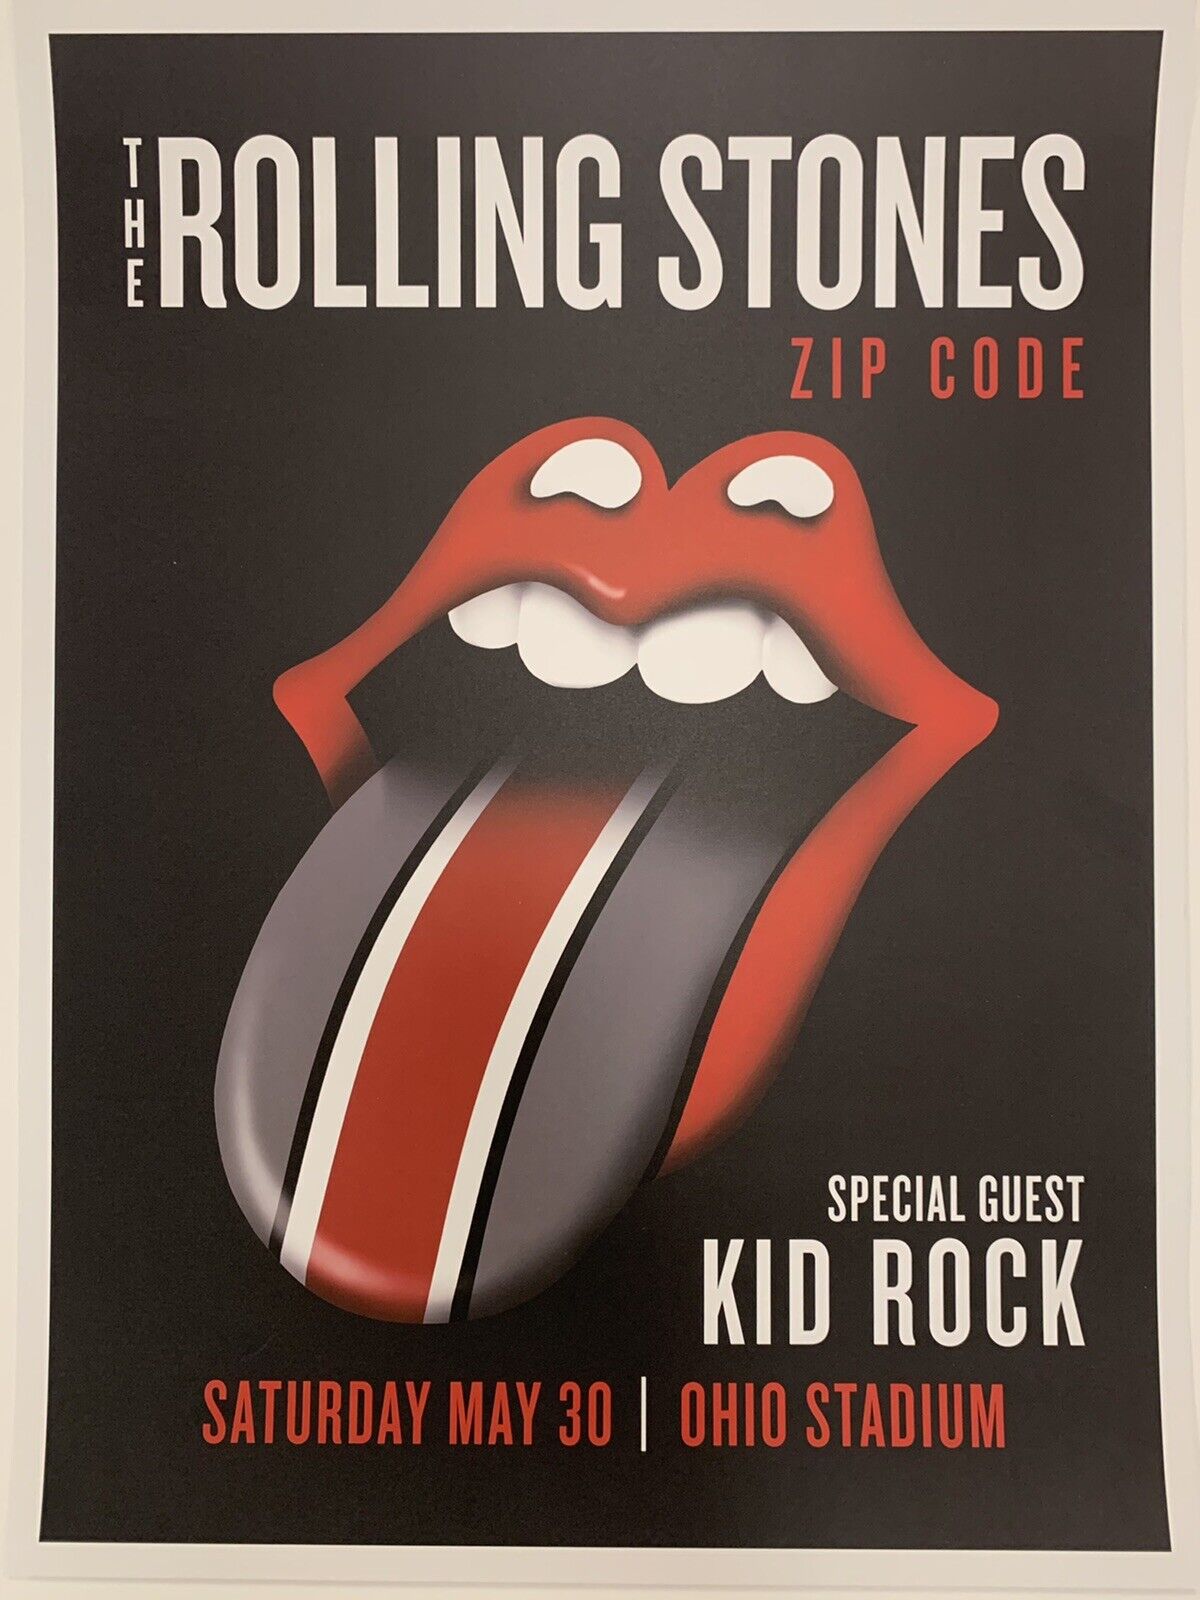 The Rolling Stones Zip Code Poster May 30 2015 Kid Rock Ohio State Buckeyes